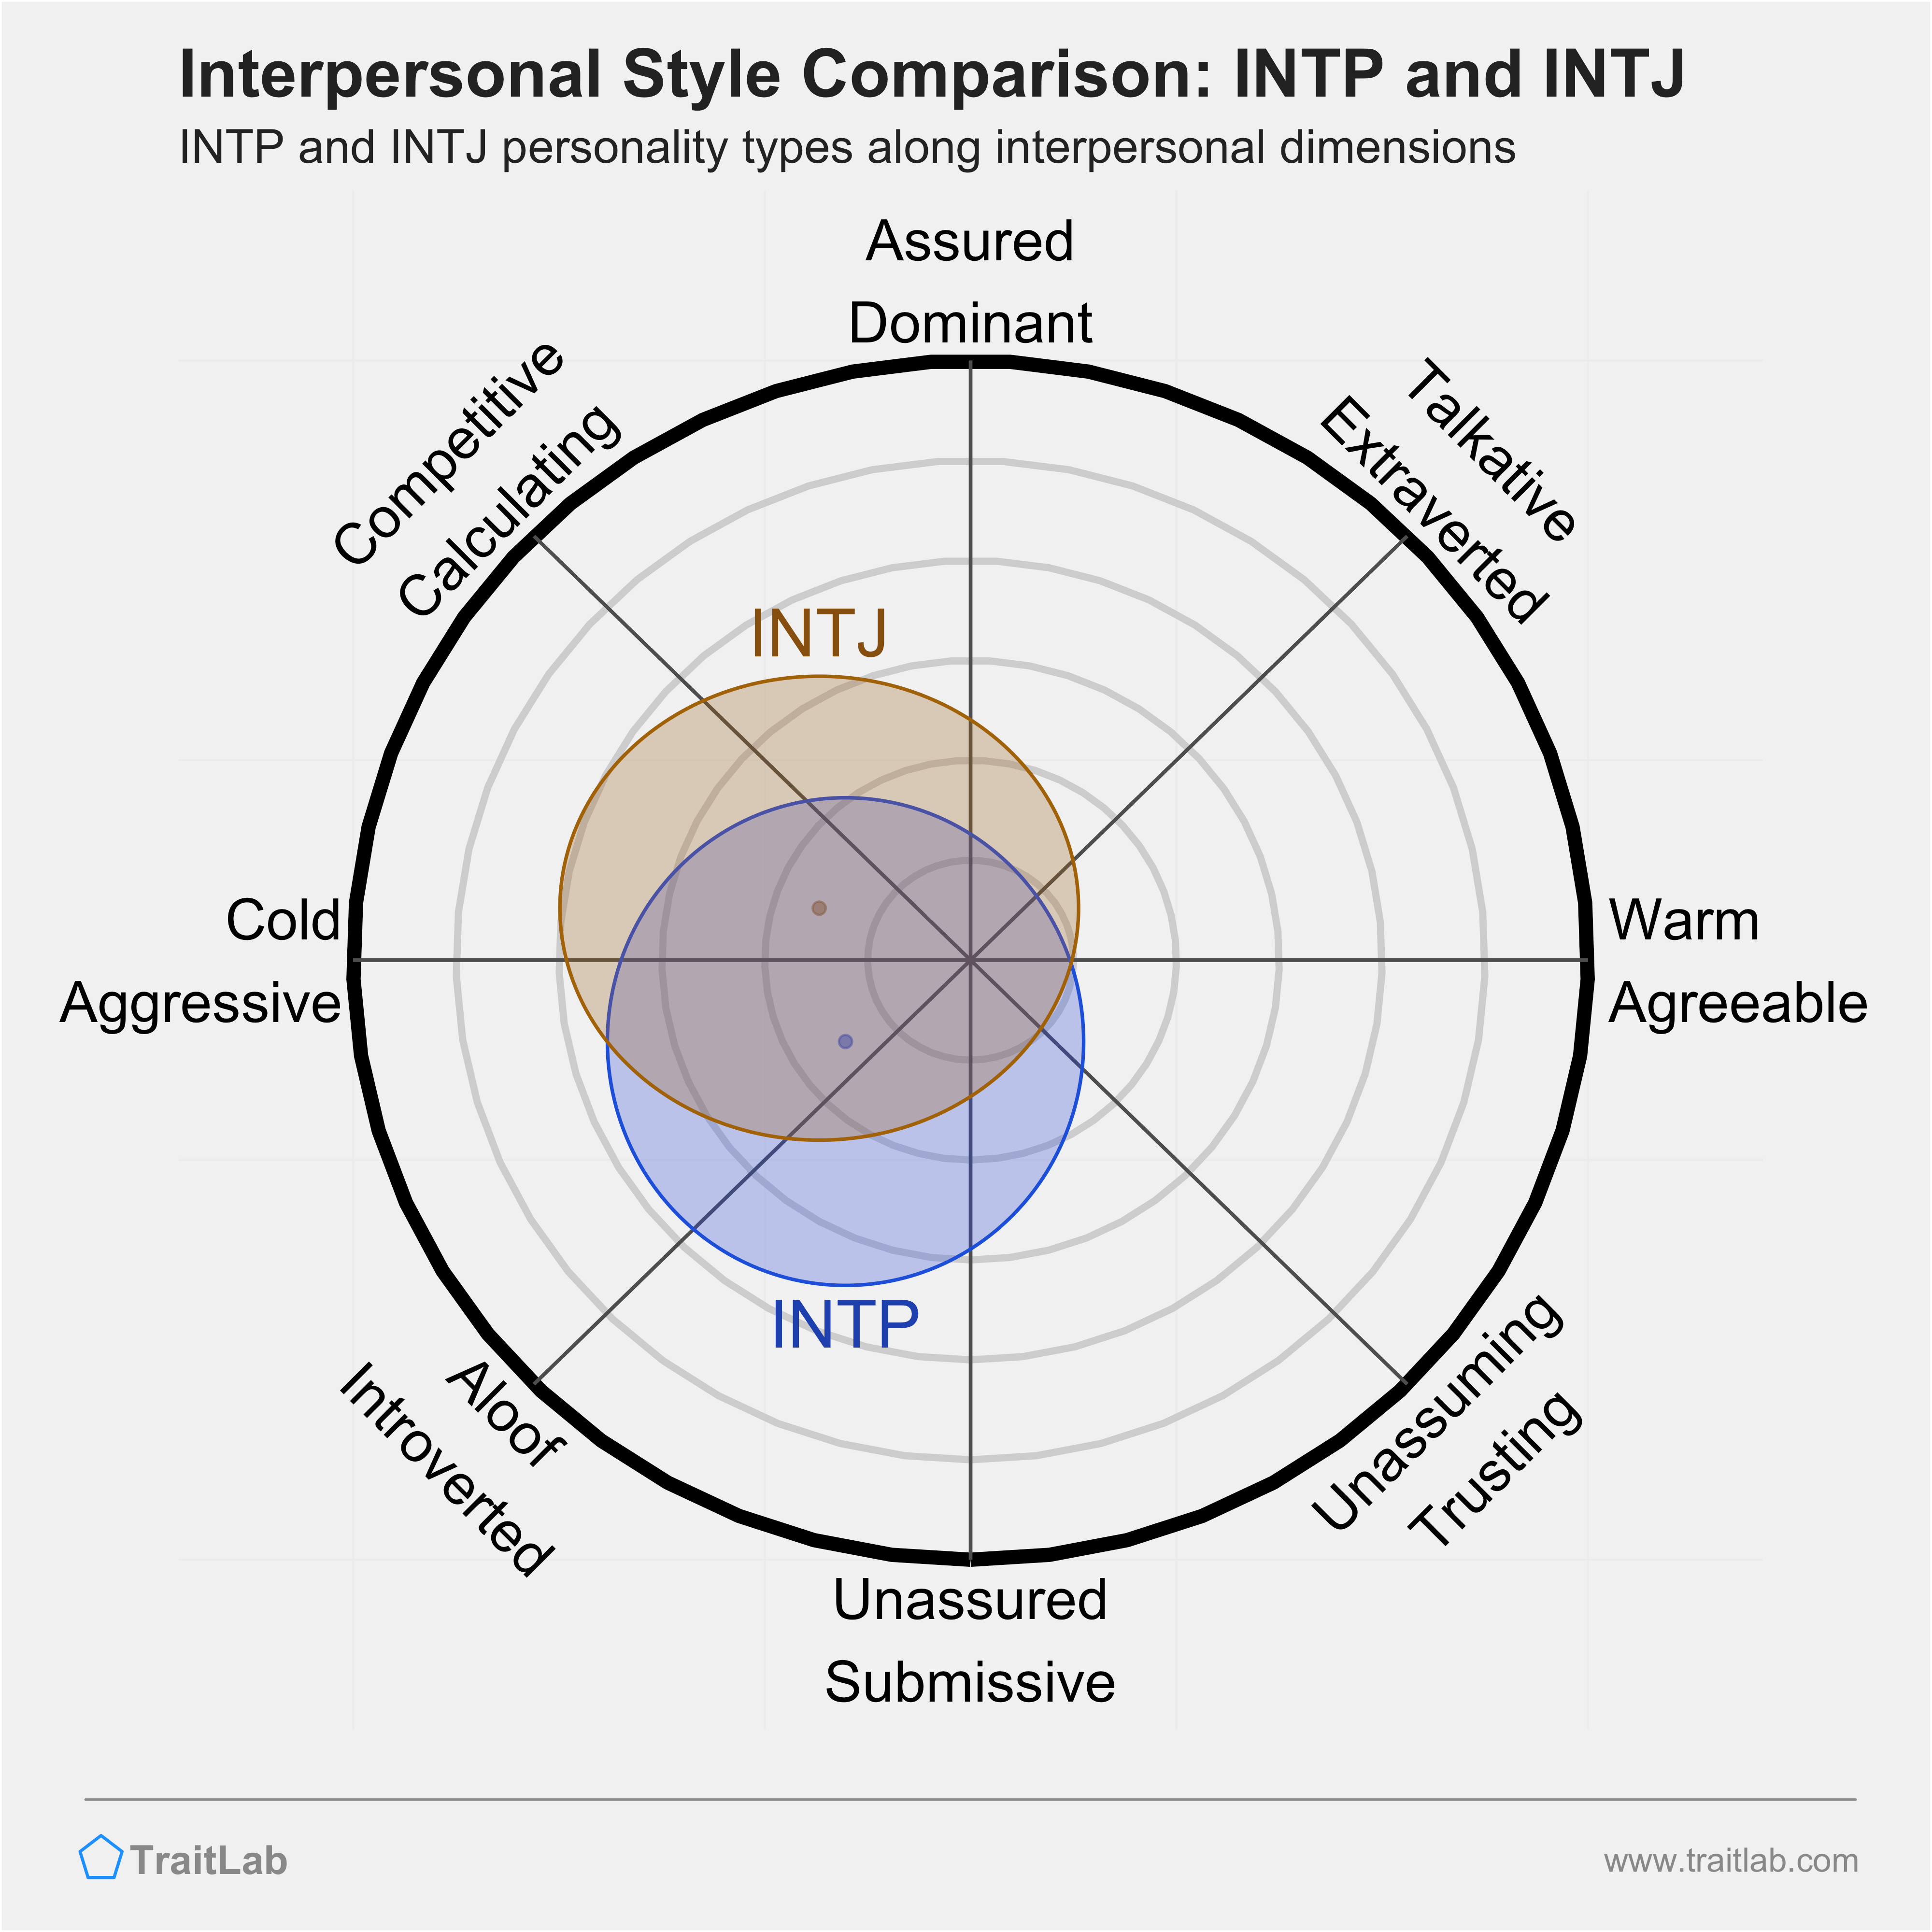 INTP and INTJ comparison across interpersonal dimensions